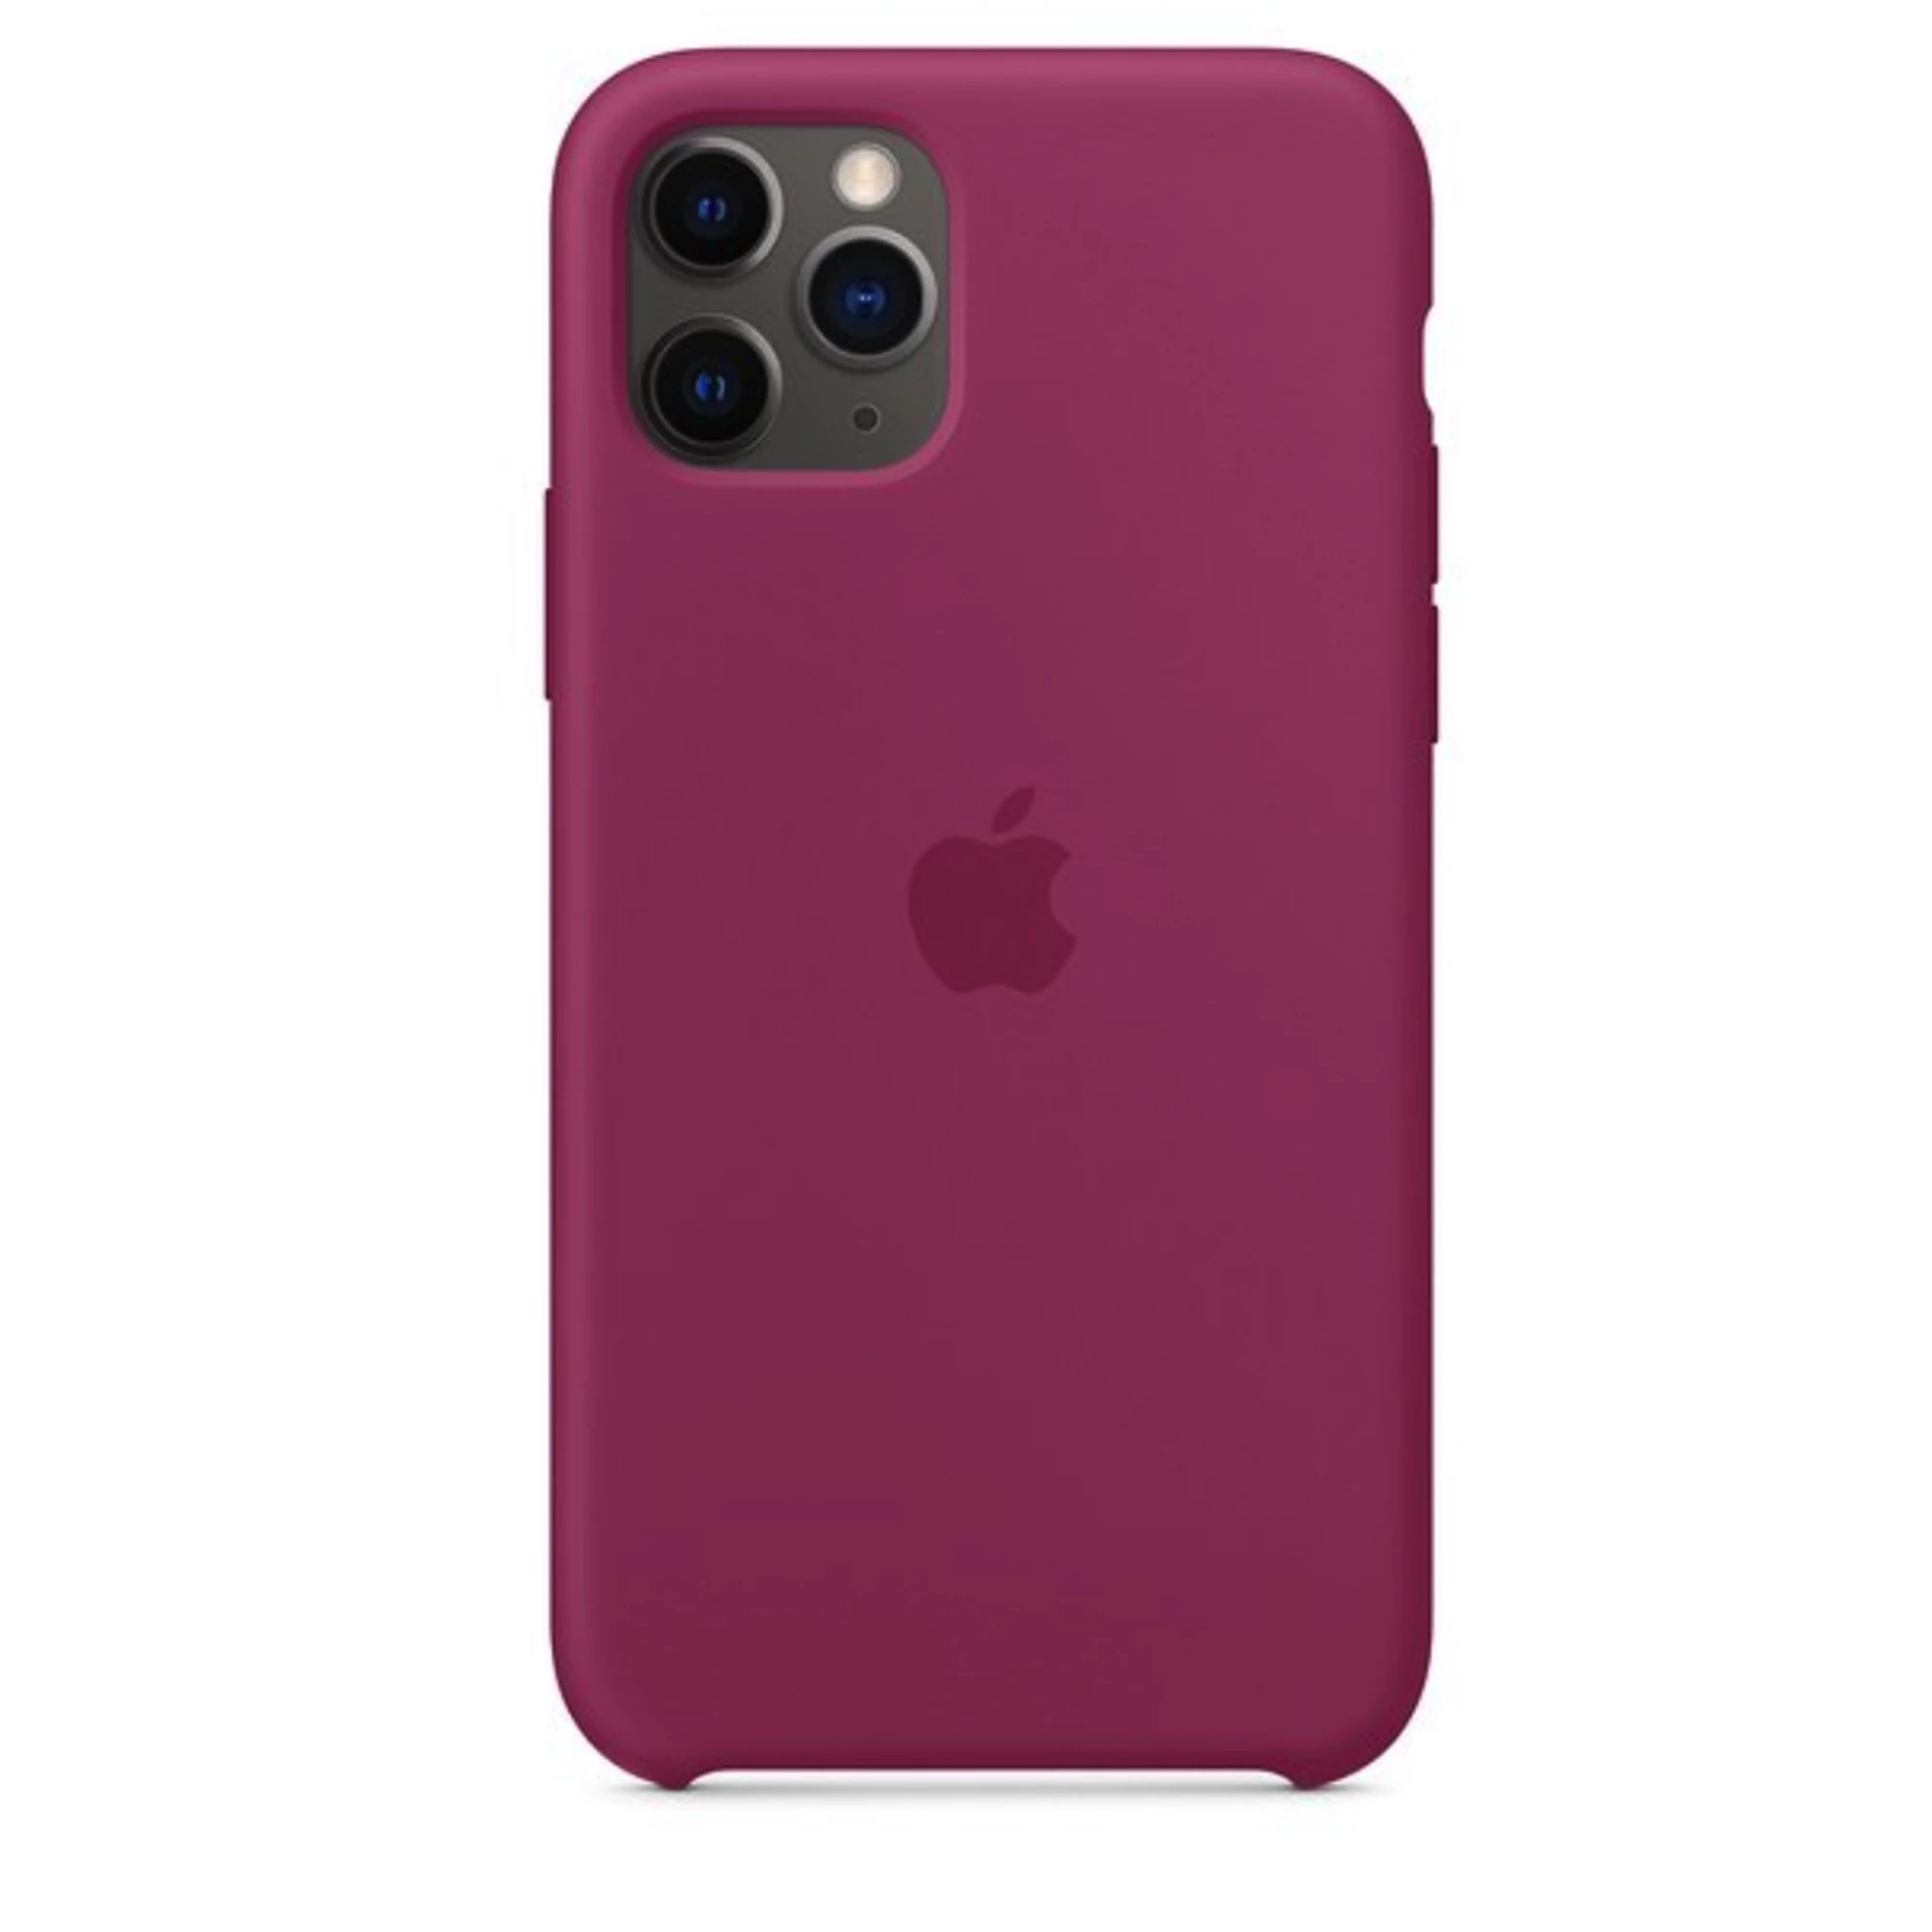 Apple iPhone 11 Pro Silicone Case LUX COPY - Pomegranate (MXM82)